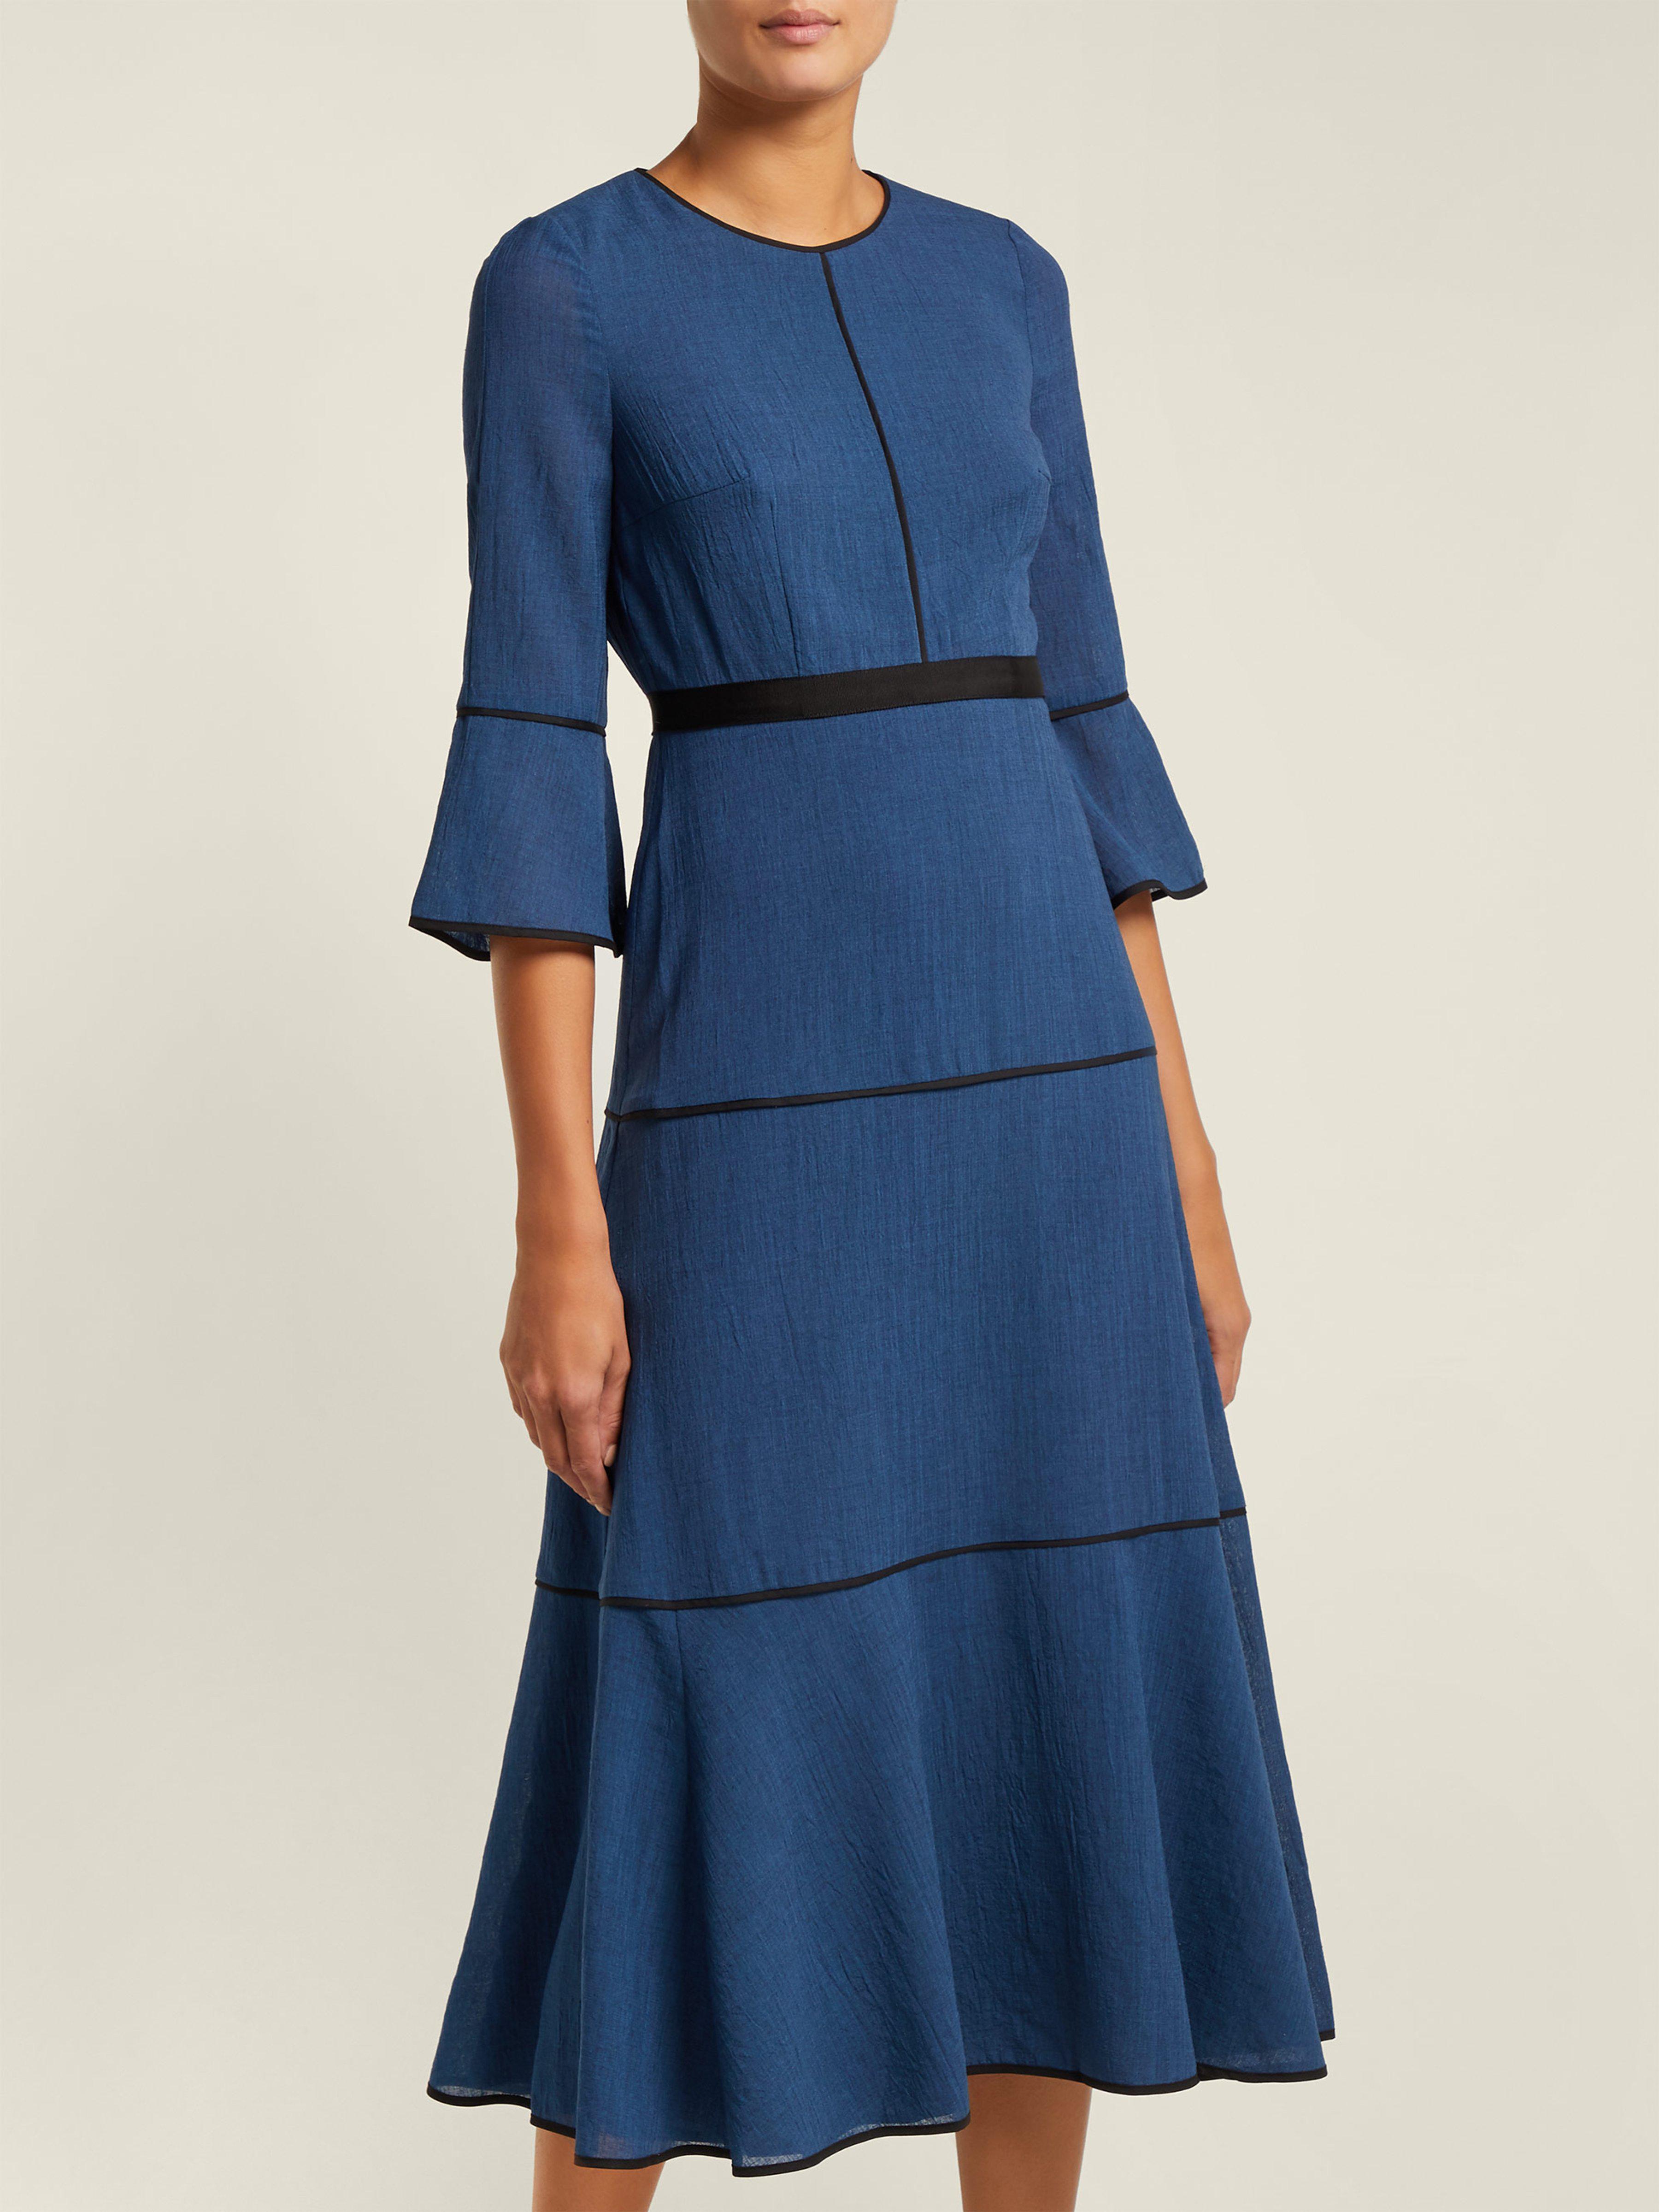 Cefinn Tiered Voile Midi Dress in Blue - Lyst